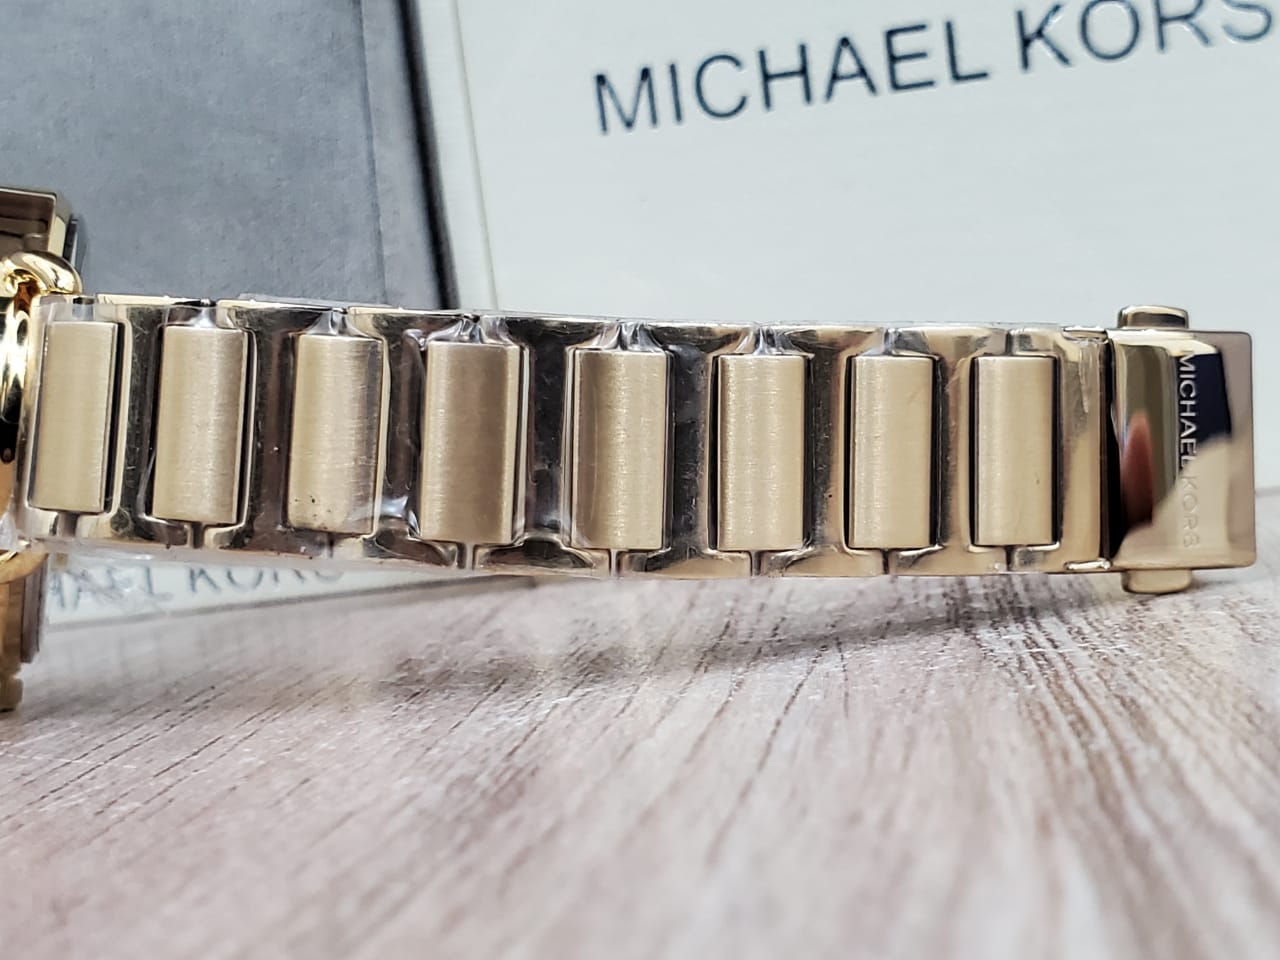 Michael Kors Women’s Portia Watch MK 3824